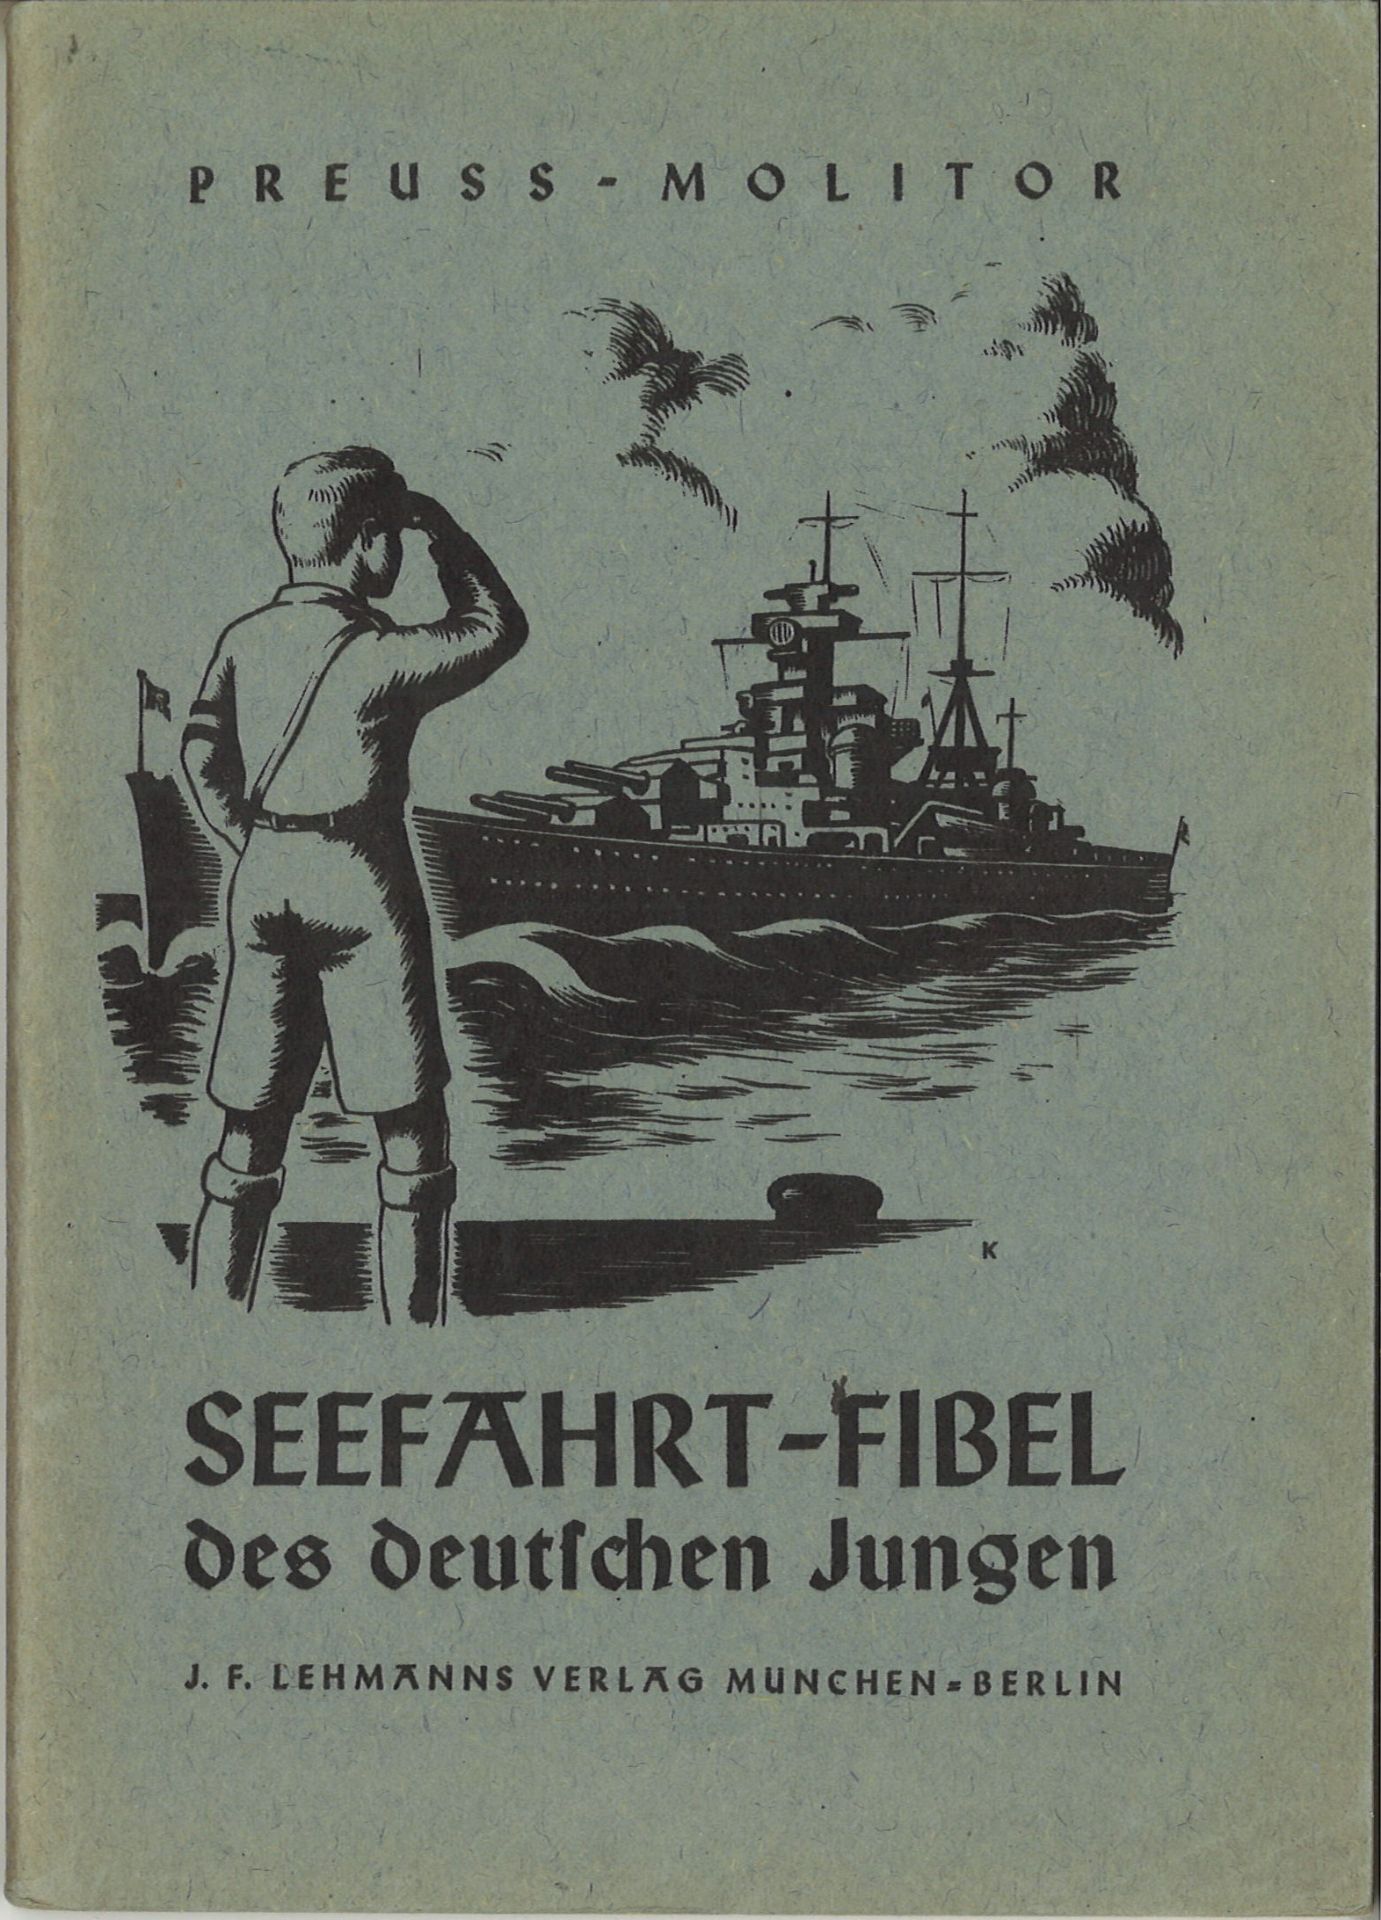 Seefahrt-Fibel des deutschen Jungen, Preuss-Molitor, J.F. Lehmanns Verlag München/Berlin, 1941,